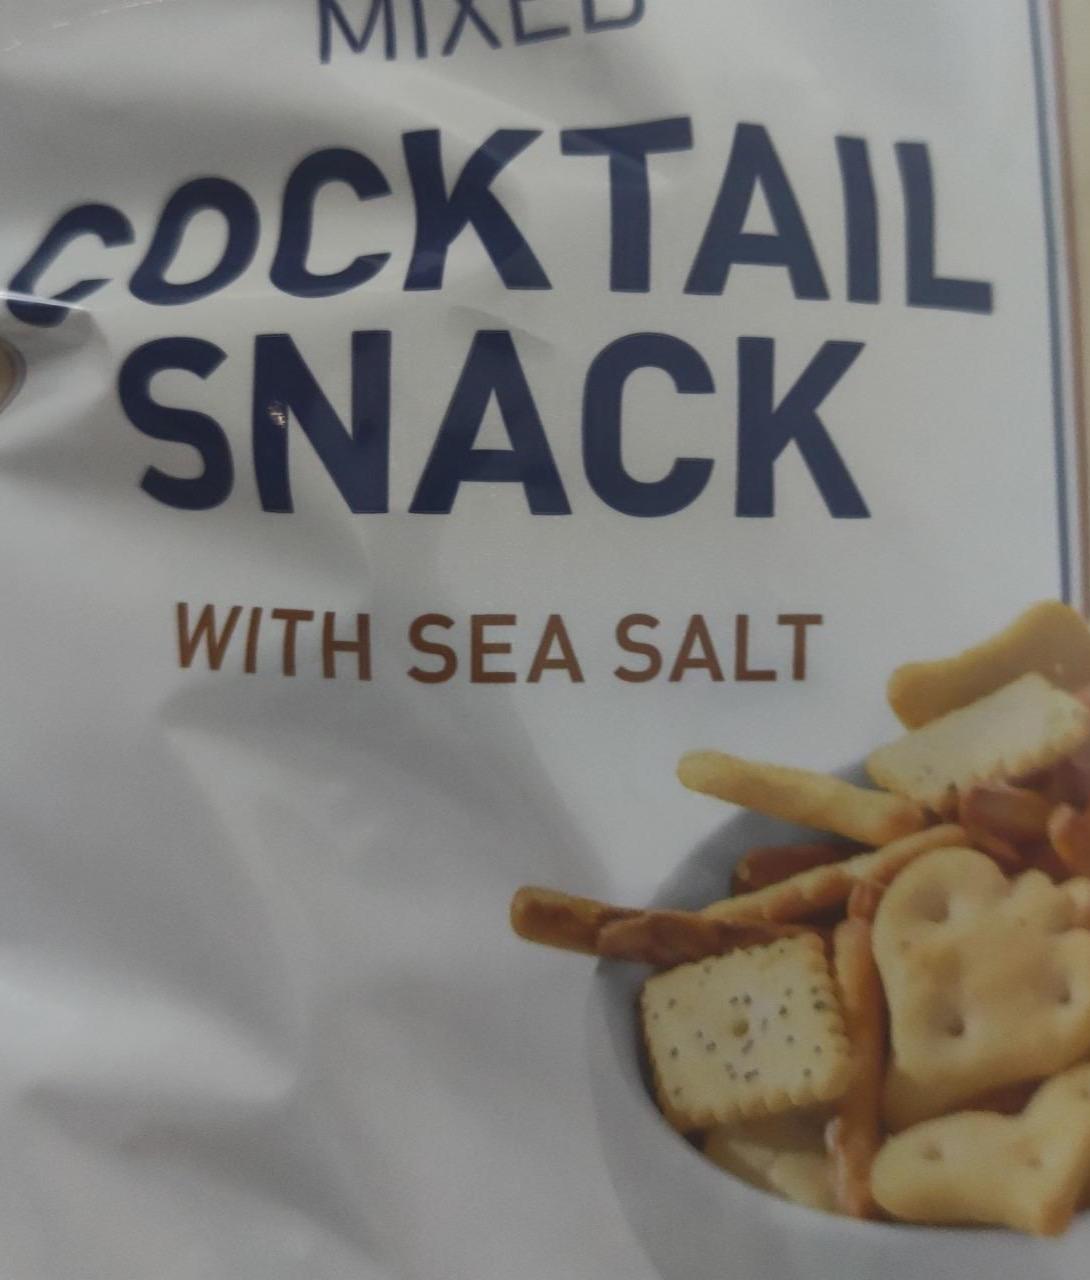 Фото - Mixed cocktail snack with sea salt Metro Chef